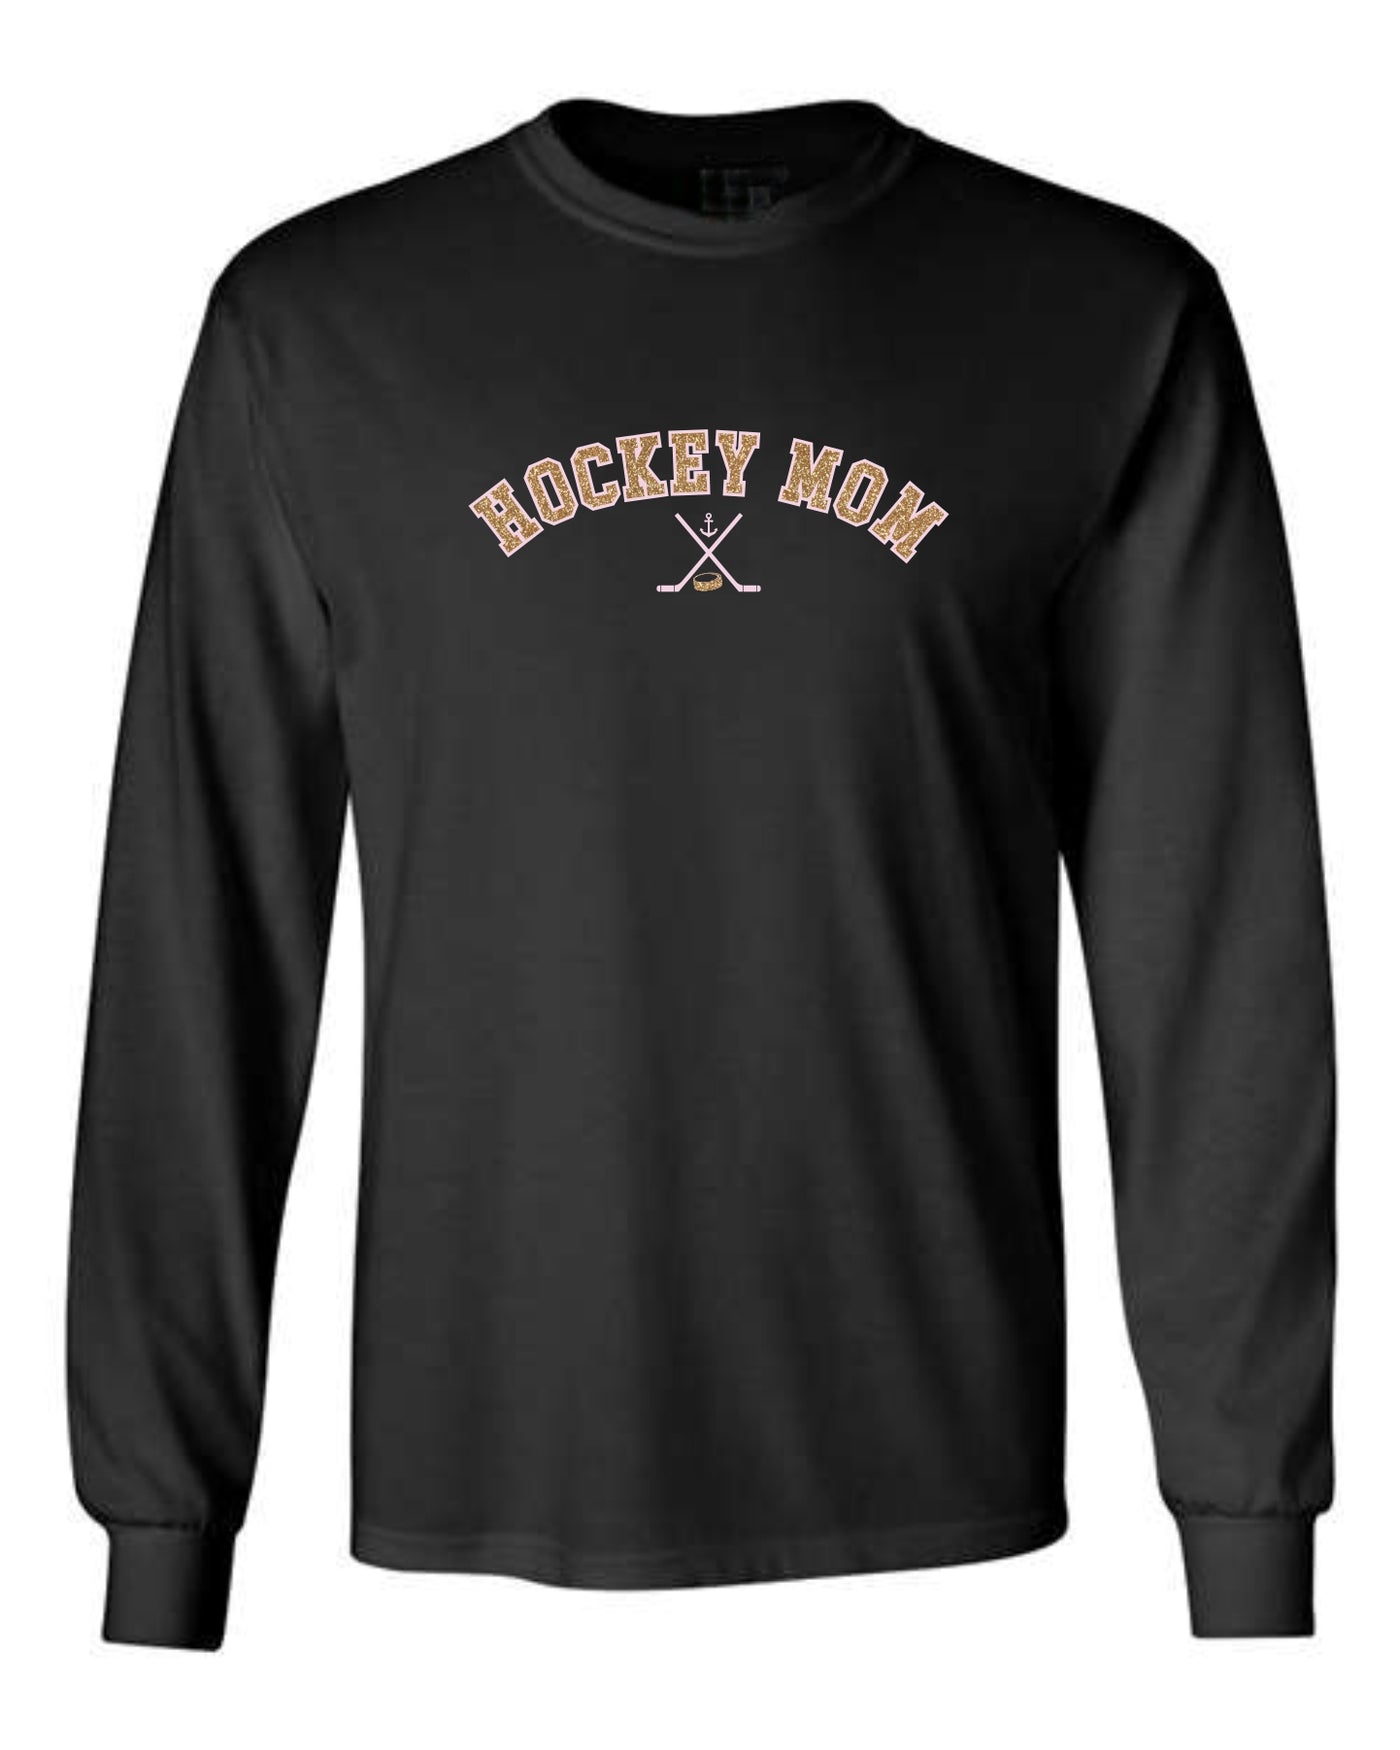 "Hockey Mom" Unisex Long Sleeve Shirt